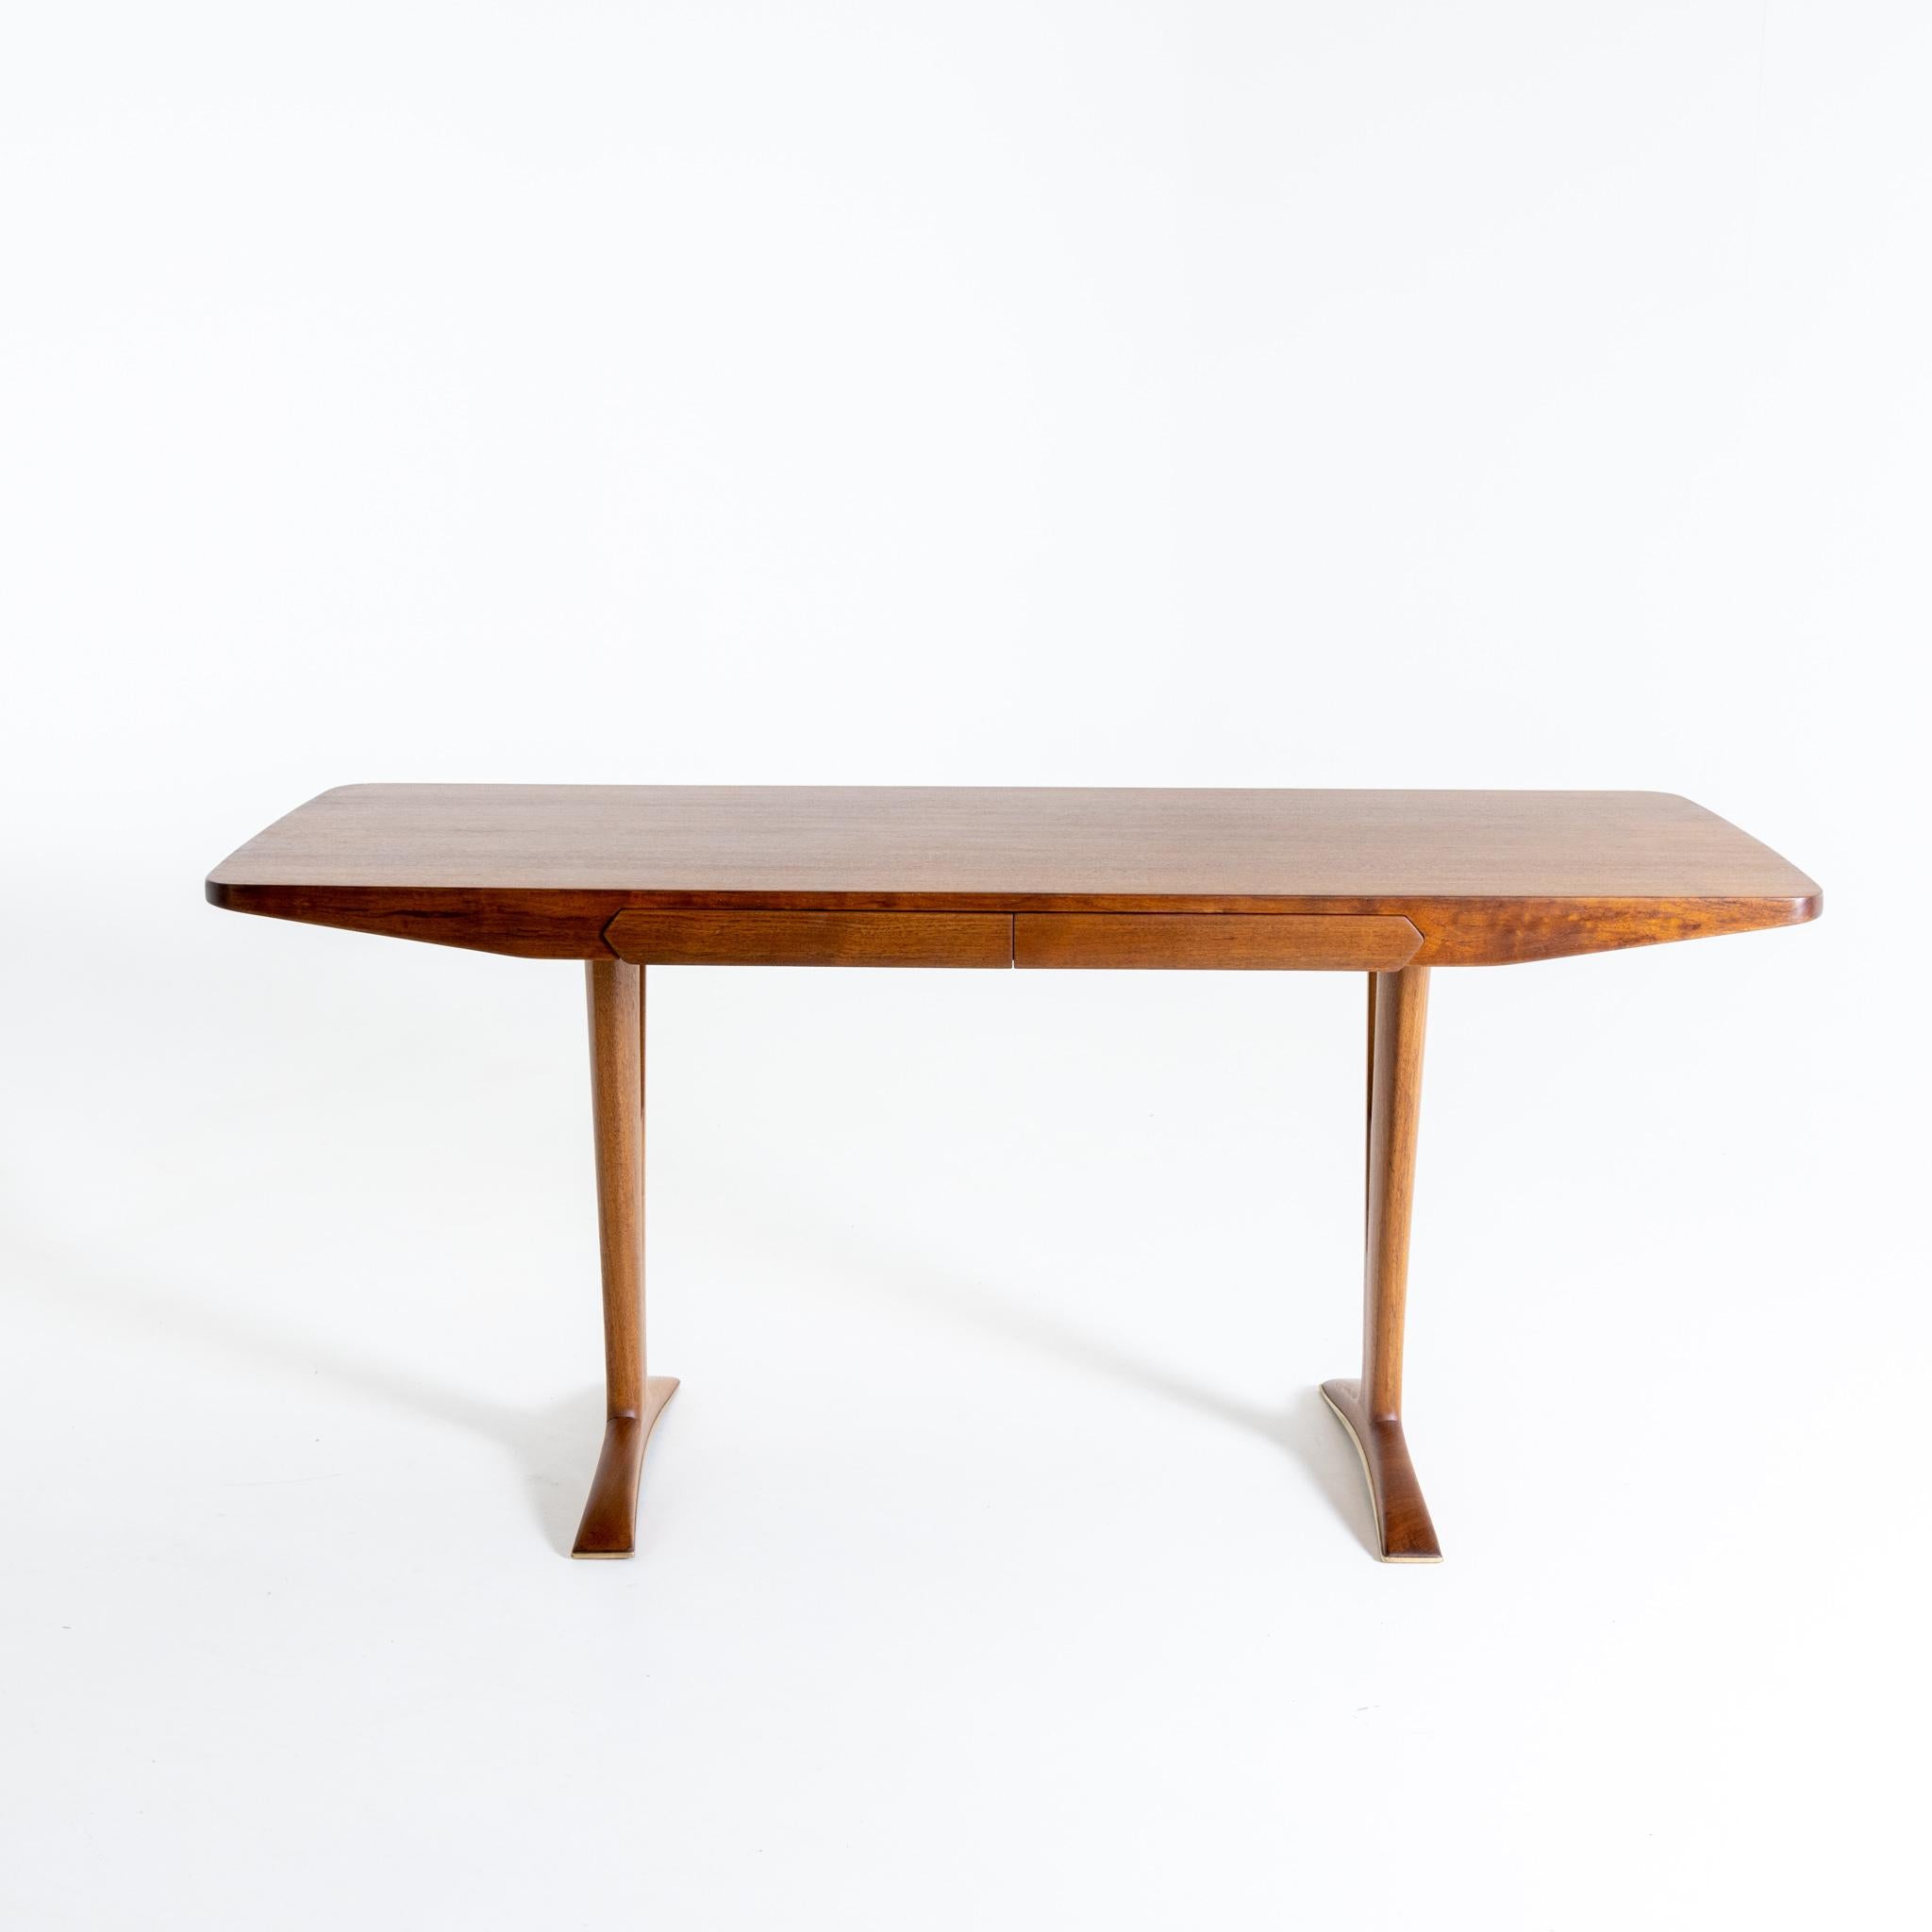 Osvaldo Borsani Italian Modernist writing table.
Walnut with brass details on the feet. Two drawers.